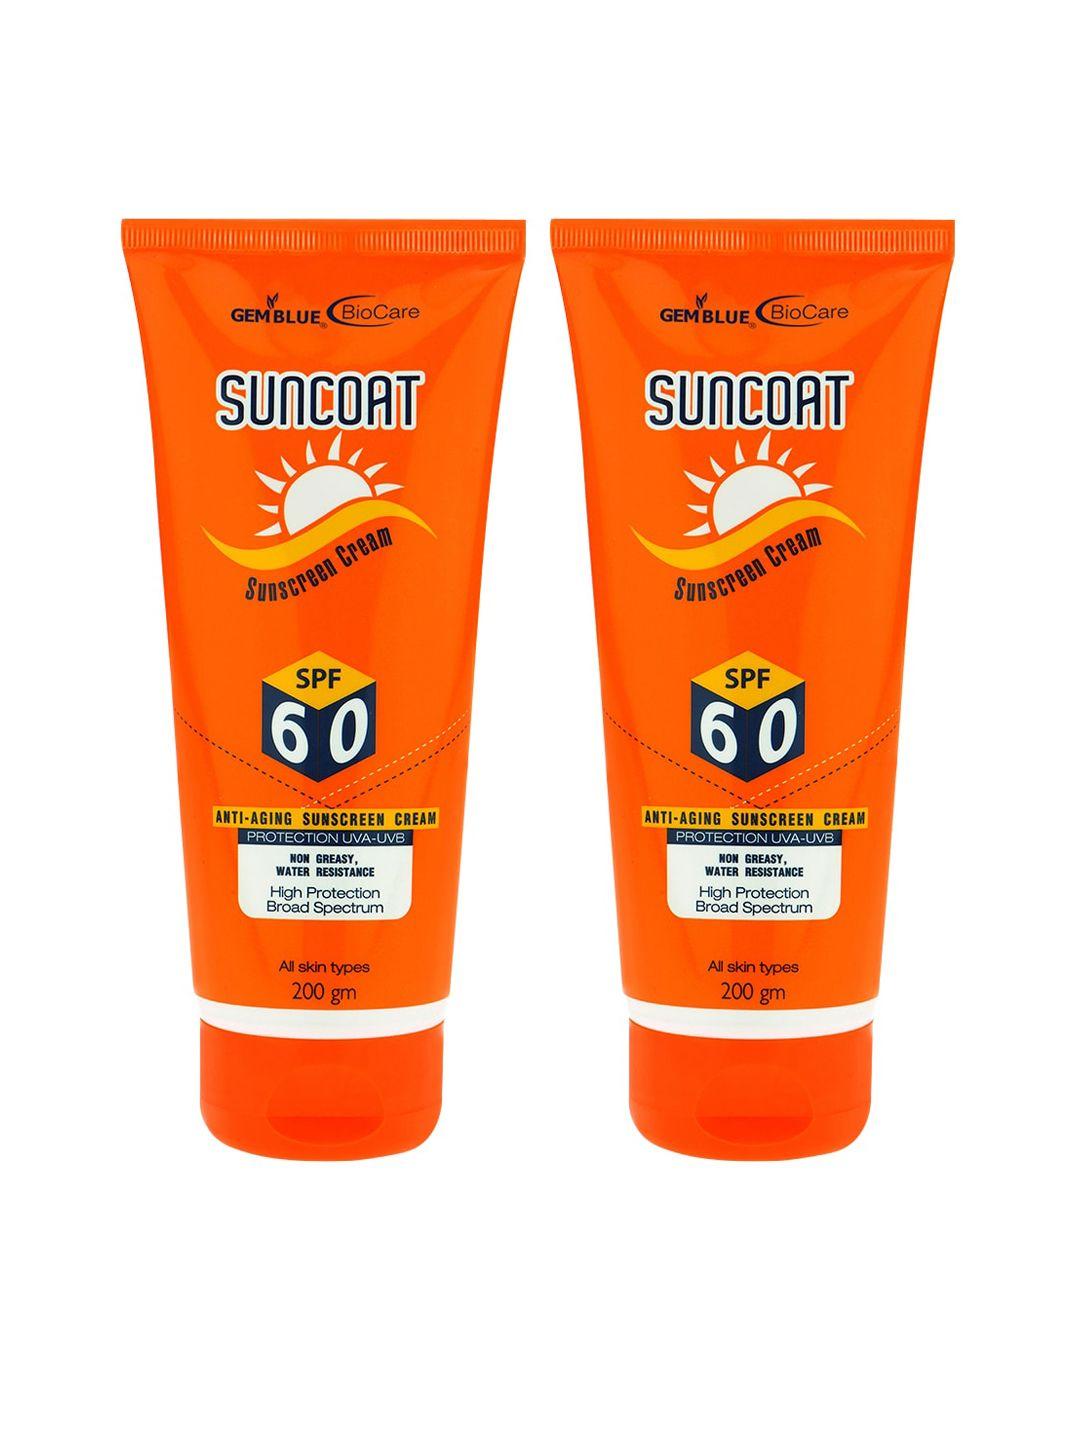 gemblue biocare unisex pack of 2 suncoat sunscreen cream spf 60 400 gm